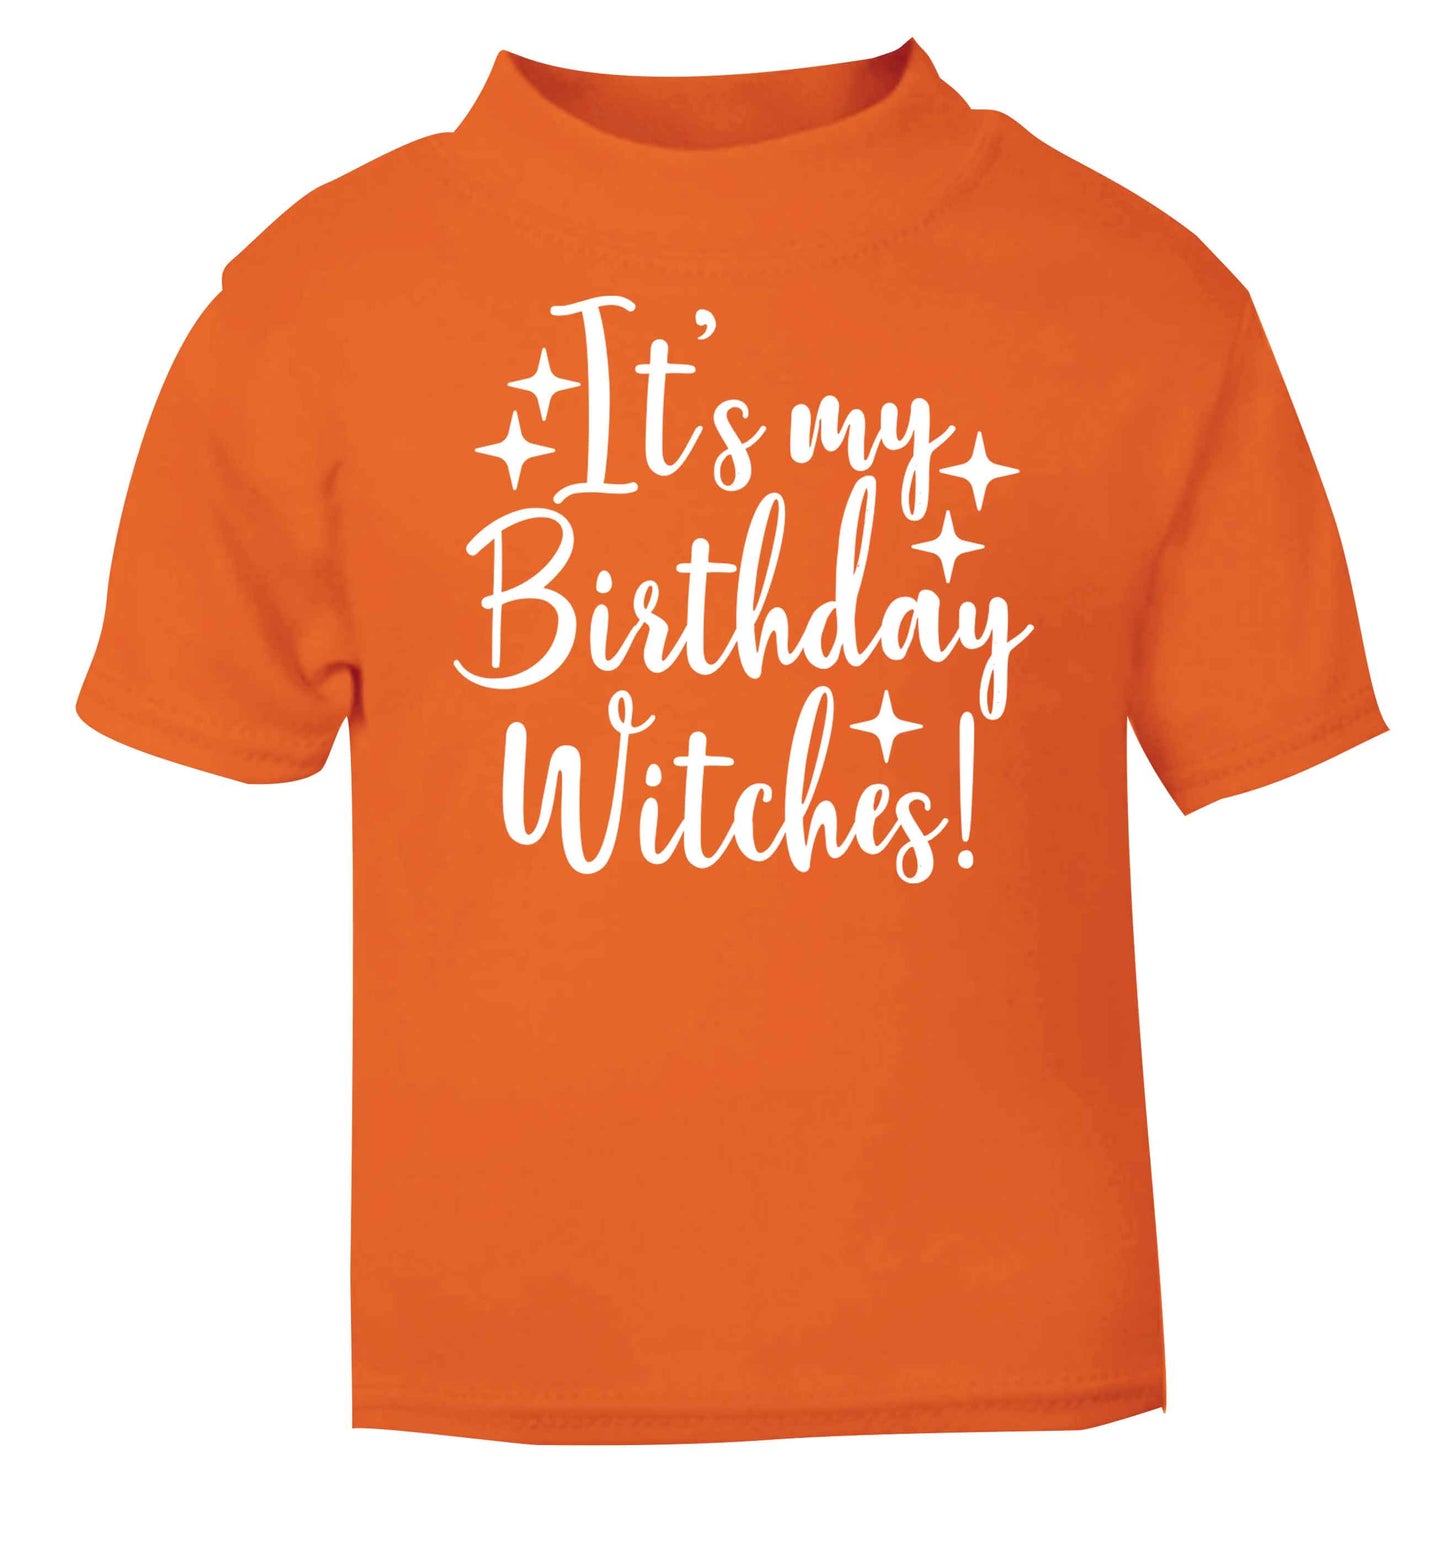 It's my birthday witches!orange baby toddler Tshirt 2 Years